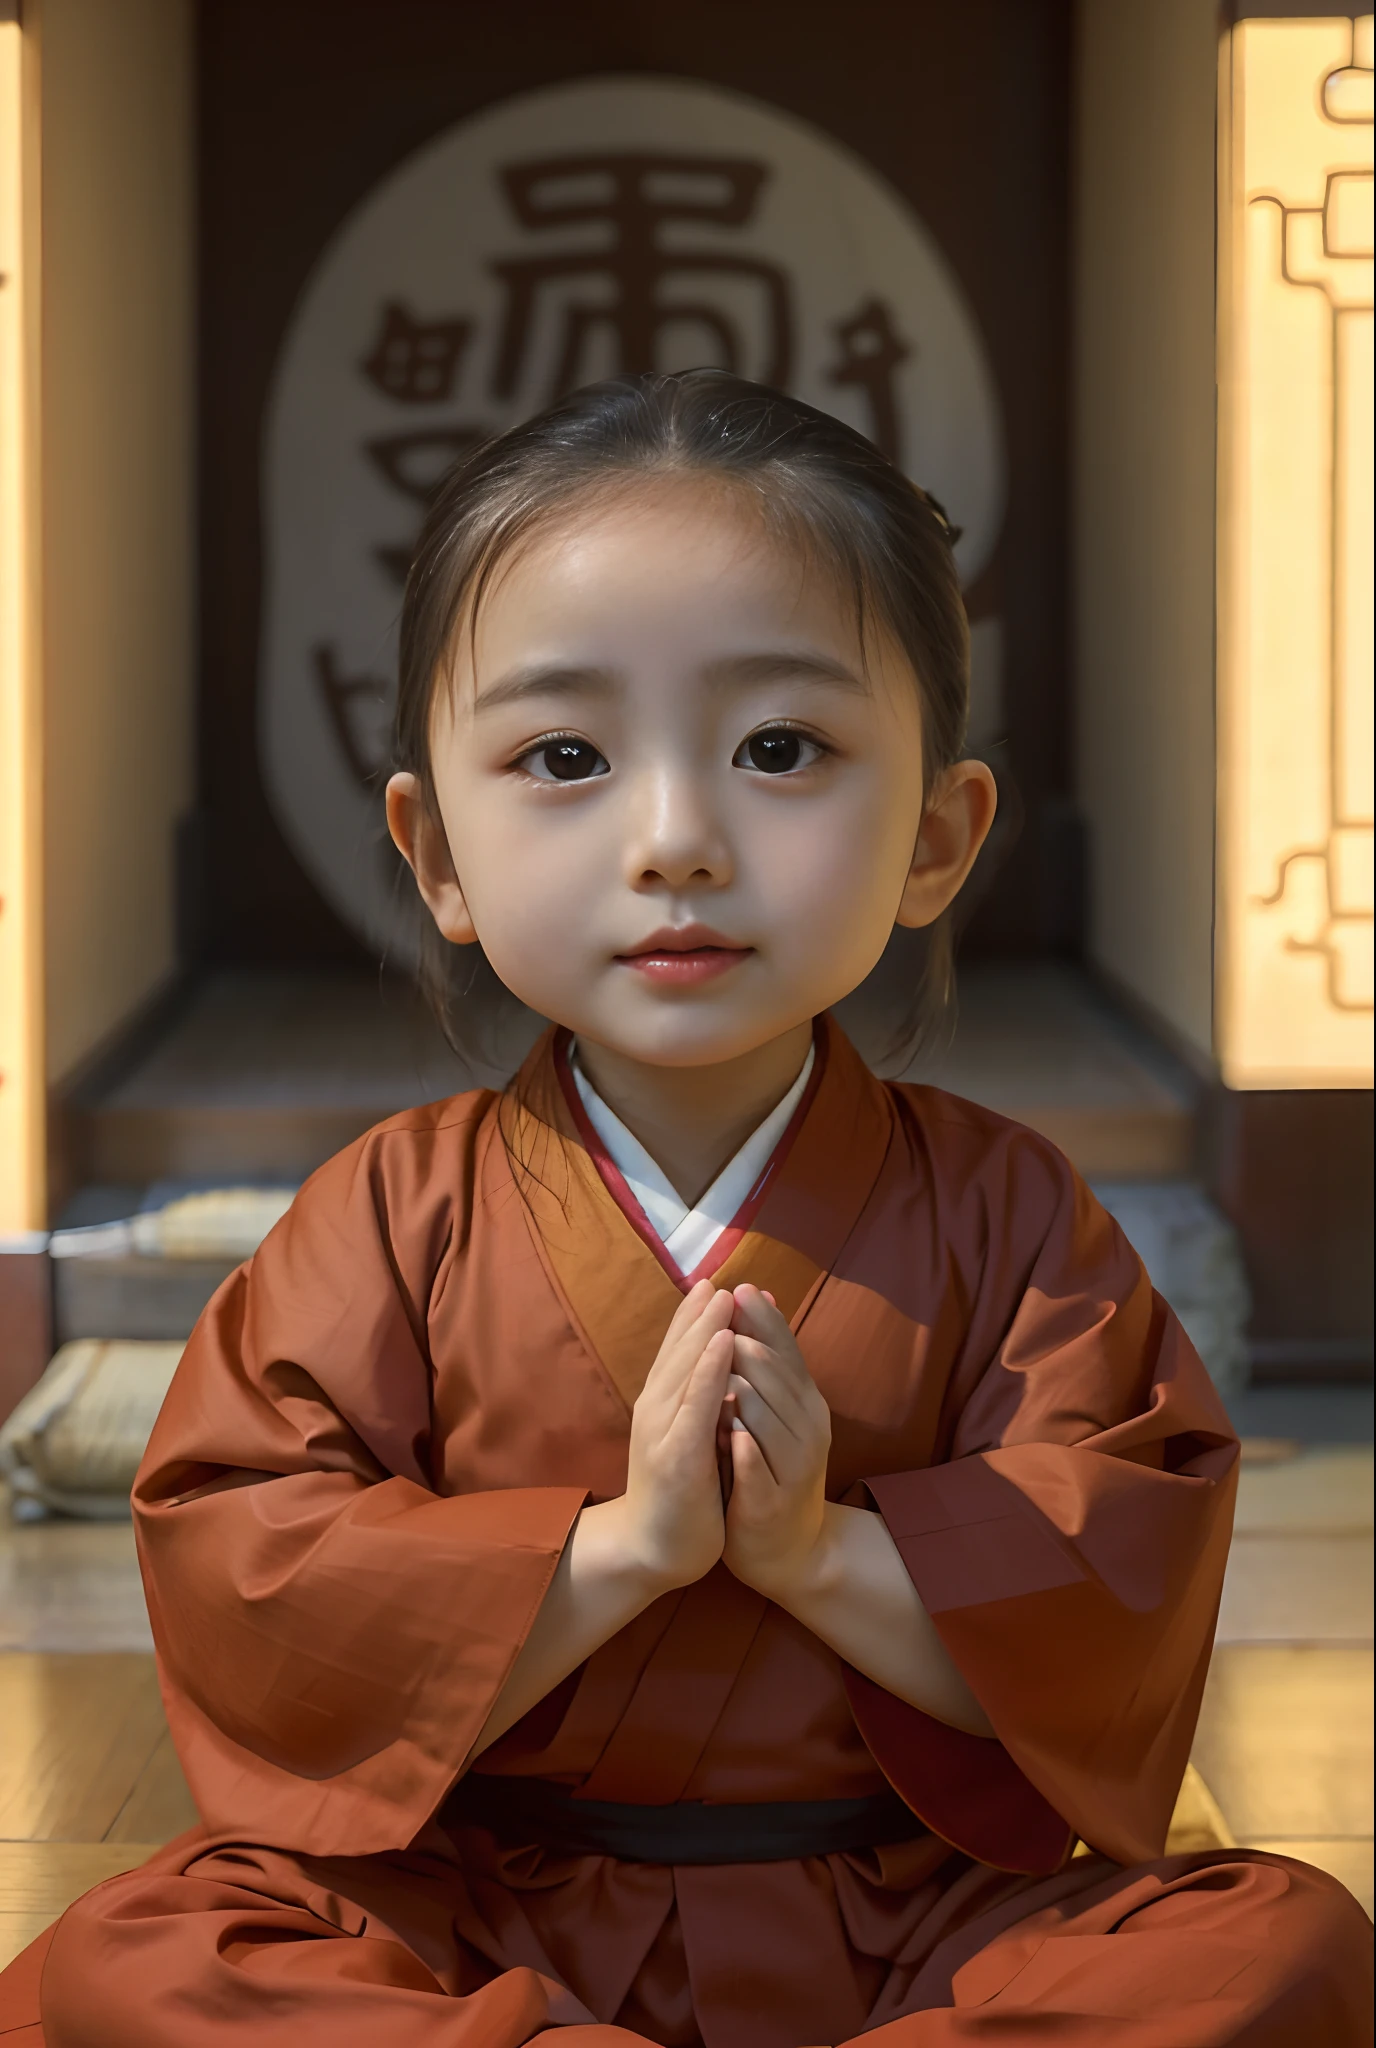 Alafeld アジアの女の子 sitting on the floor in kimono, 日本の少女の肖像画, Young アジアの女の子, クローズアップポートレート, クローズアップポートレート, 中国の女の子, 平和的な表現, 仏教僧侶, 茶色のローブを着て, 韓国の女の子, アジアの女の子, クローズアップポートレート, 仏教徒, 中央のポートレート, ポートレート撮影, 寺院で, クローズアップポートレート, 僧侶の服